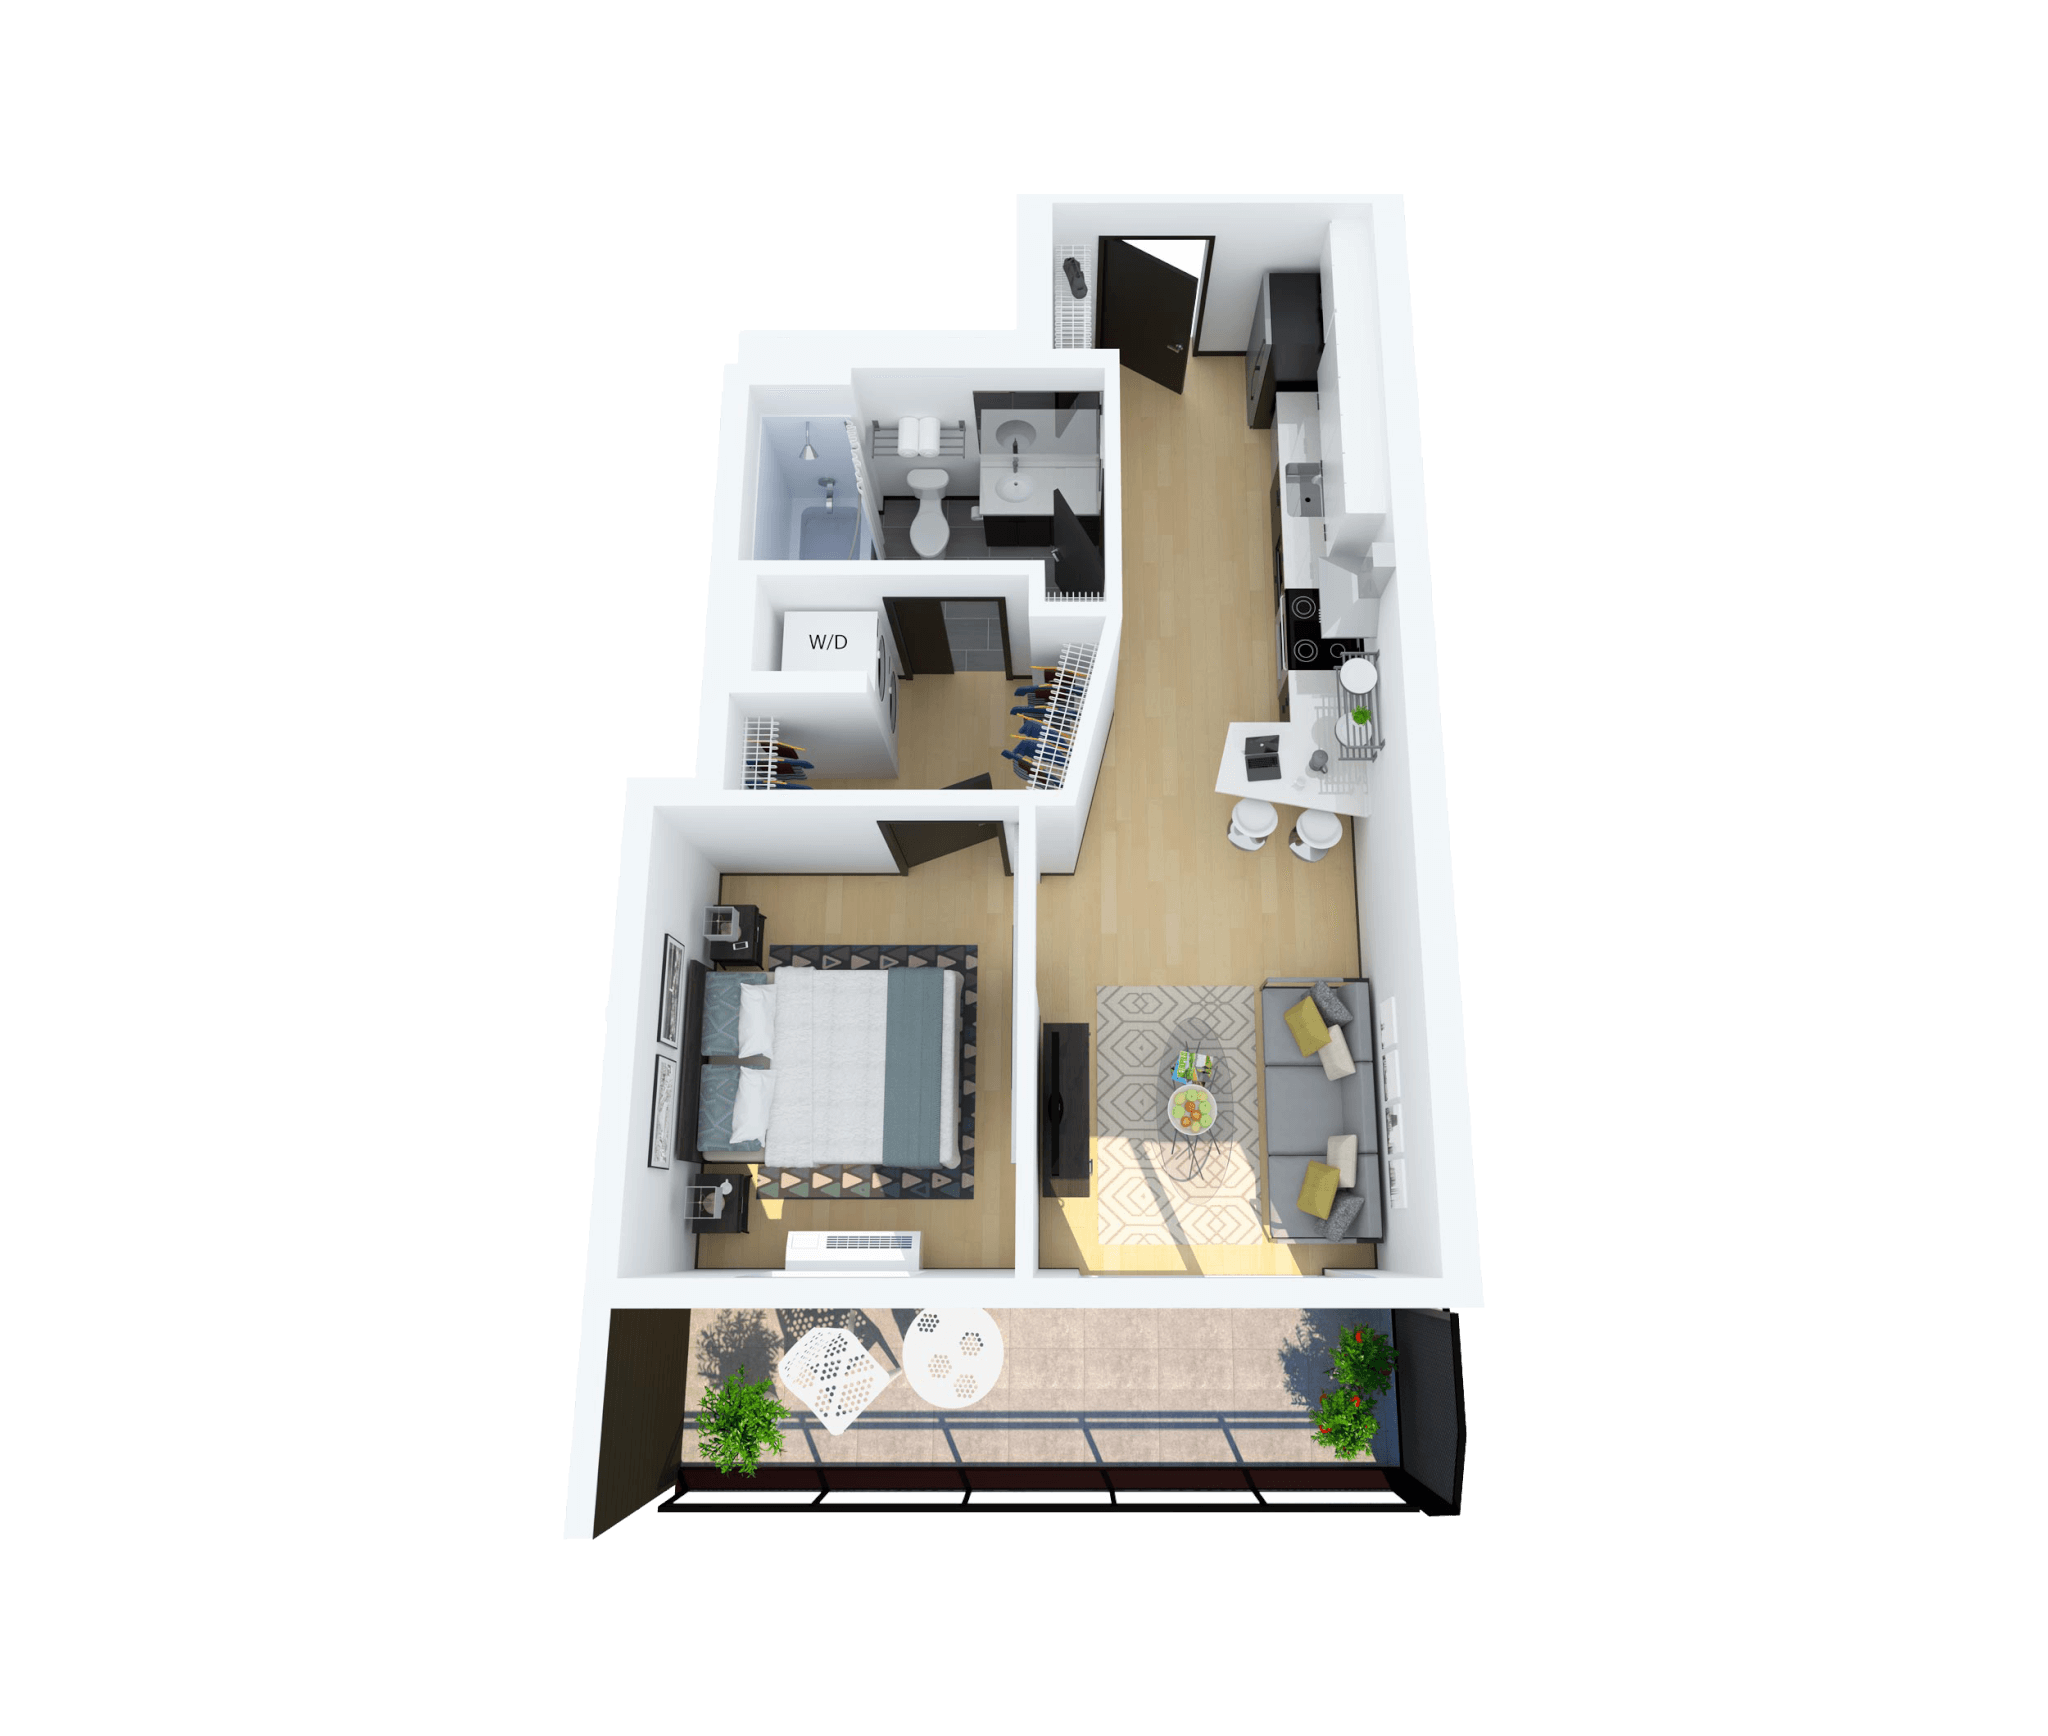 Floor Plan H – 1 Bedroom, South Facing Apartment